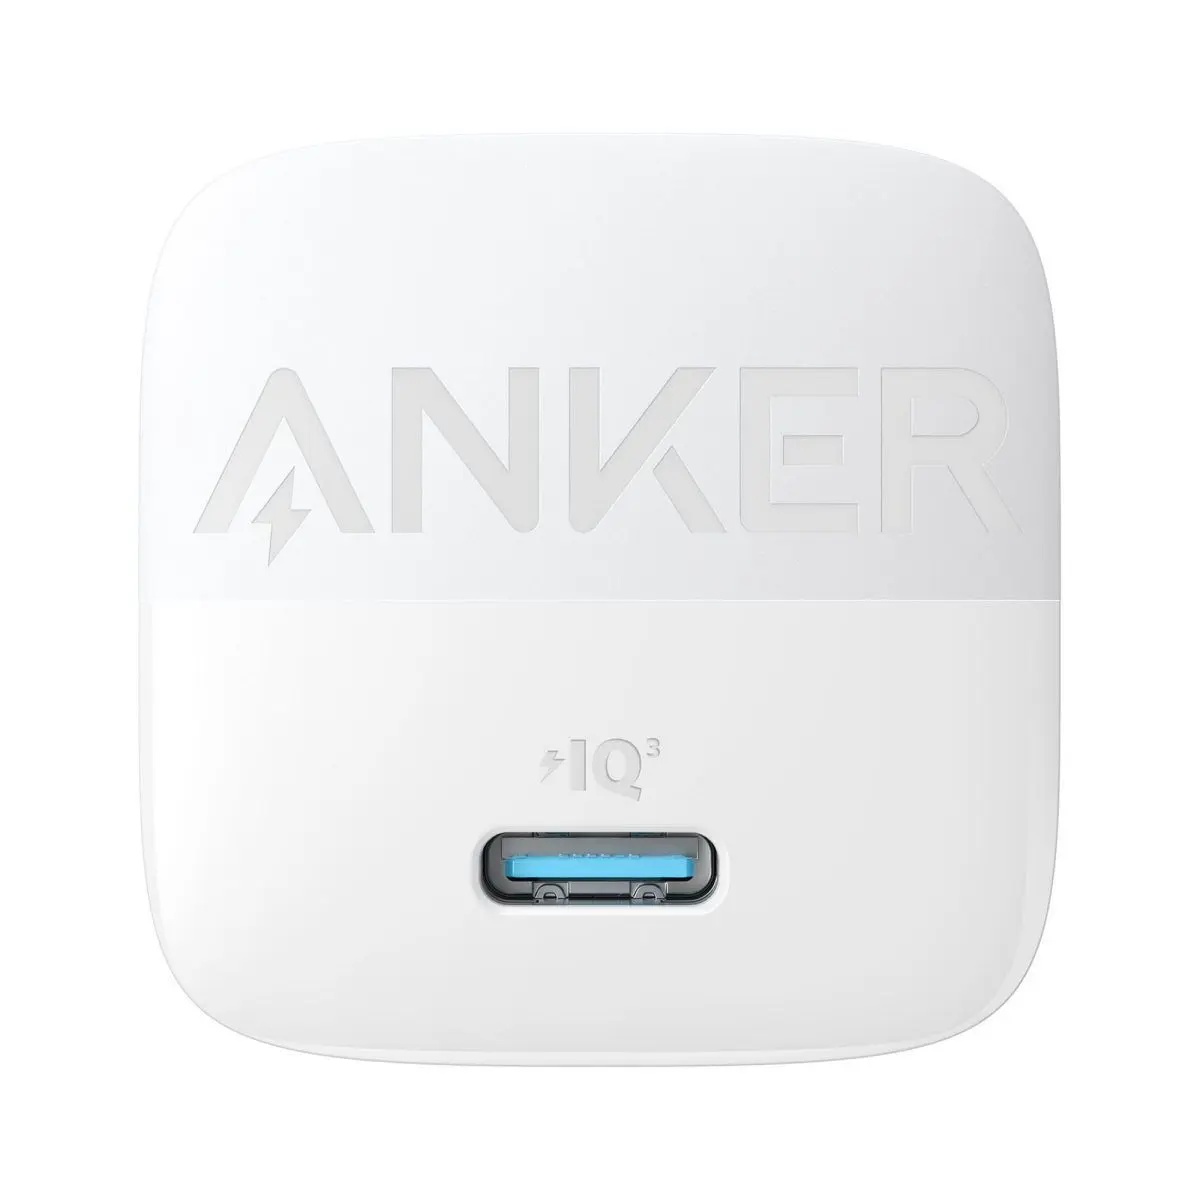 Anker 313 GaN 30W PIQ 3.0 - Foldable Fast Charger